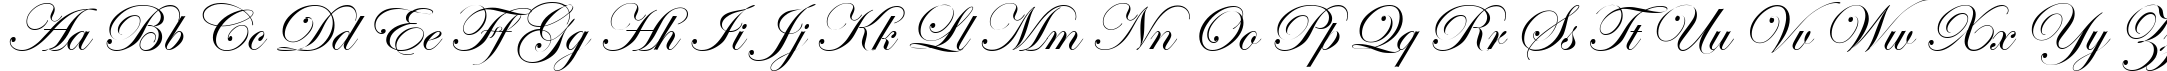 Пример написания английского алфавита шрифтом Esenin script Two